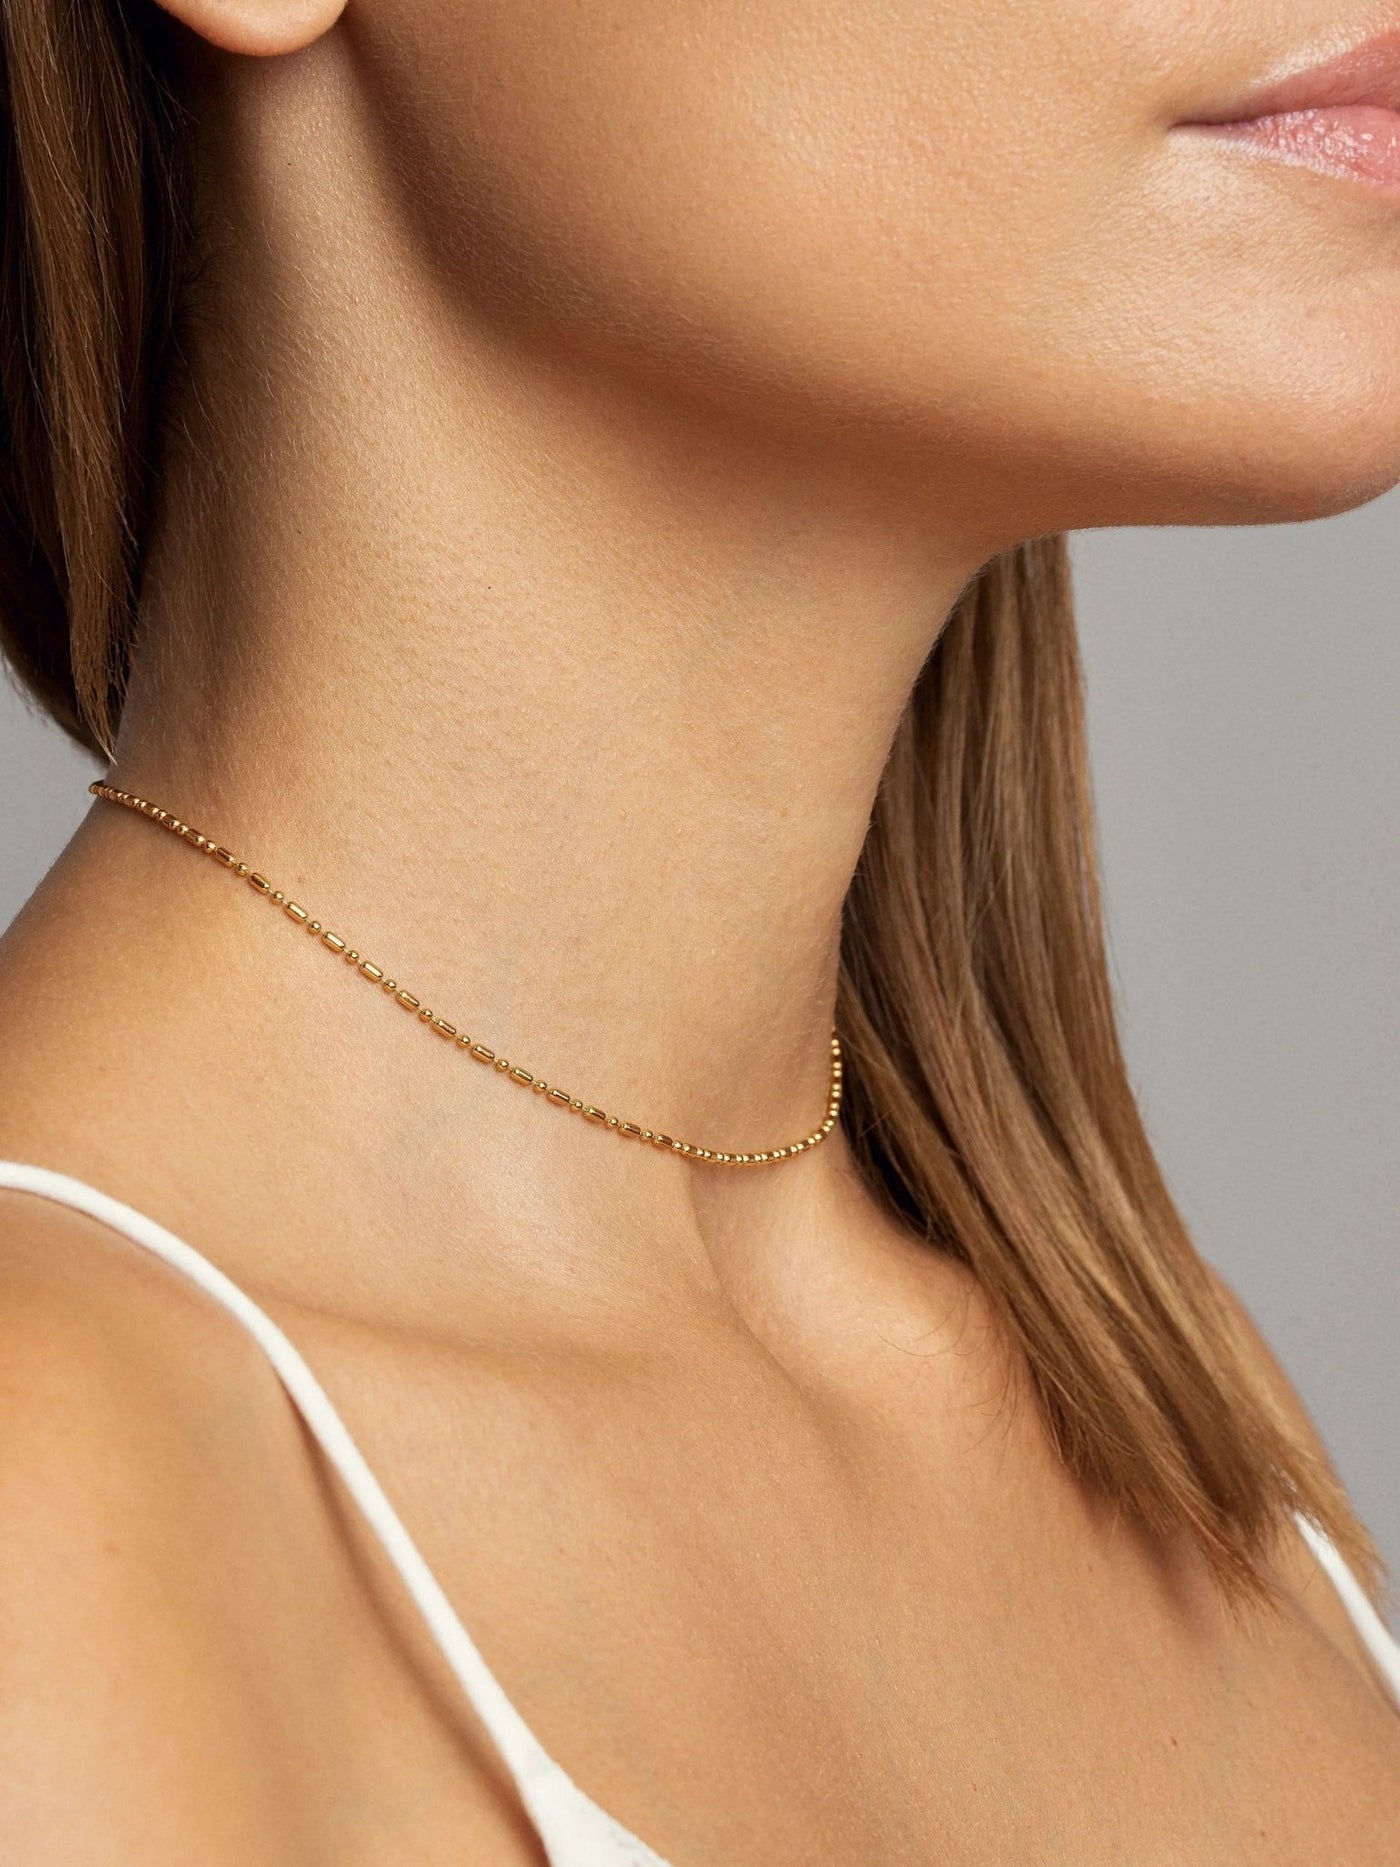 Bead Chain Necklace - 24K Gold PlatedAnniversary GiftBackUpItemsLunai Jewelry